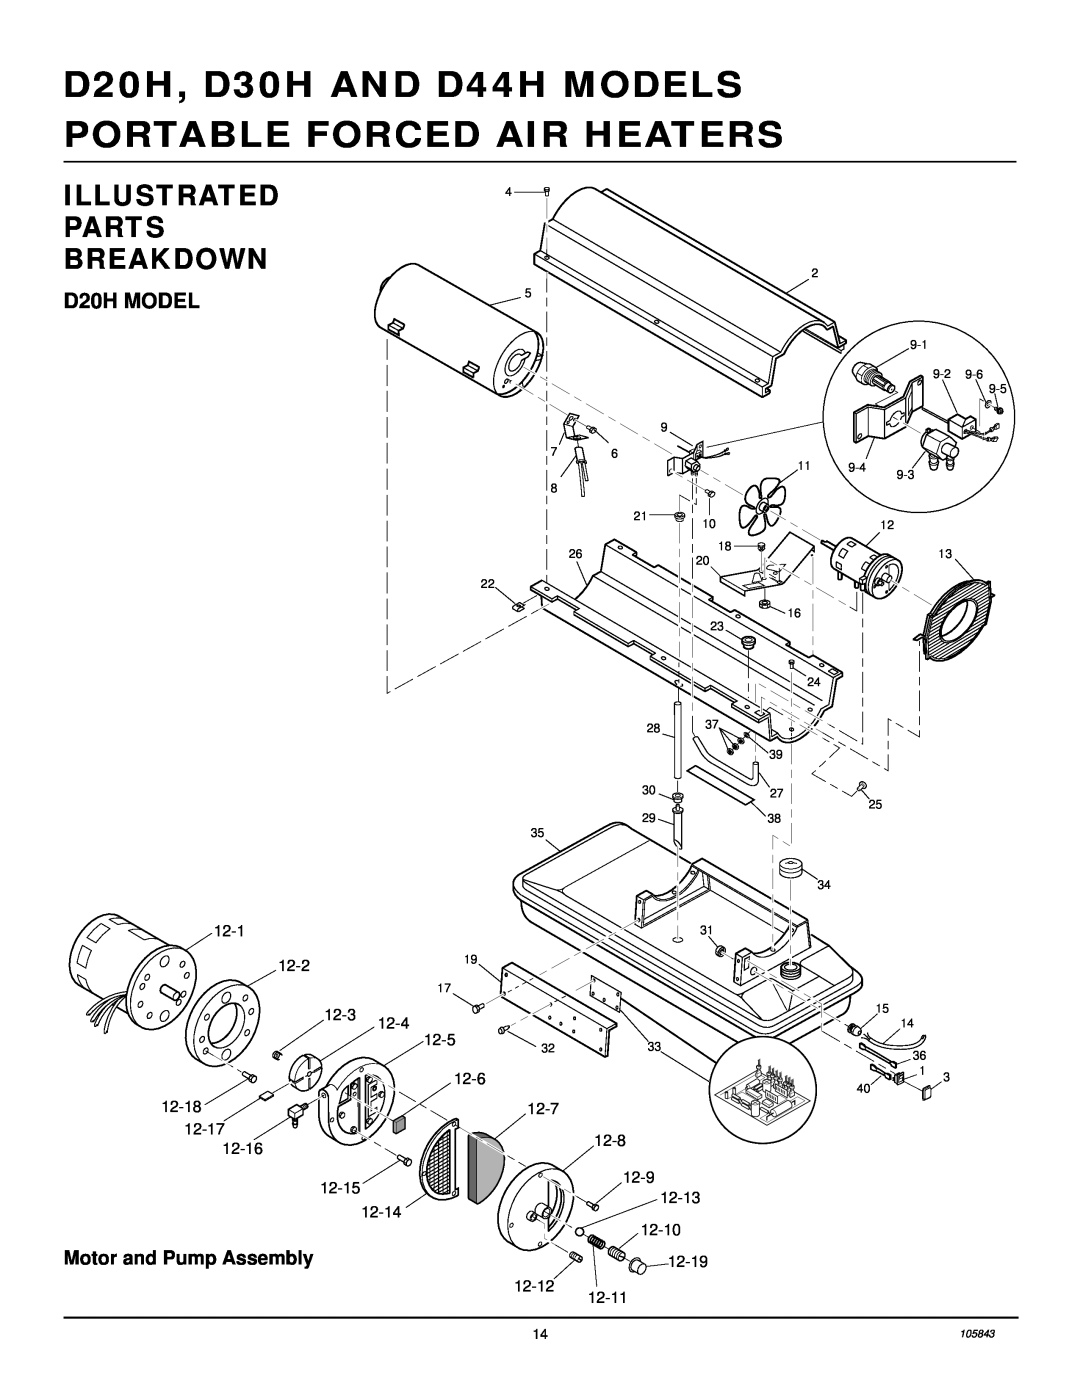 Desa D44H, D30H owner manual Illustrated Parts Breakdown, D20H MODEL 